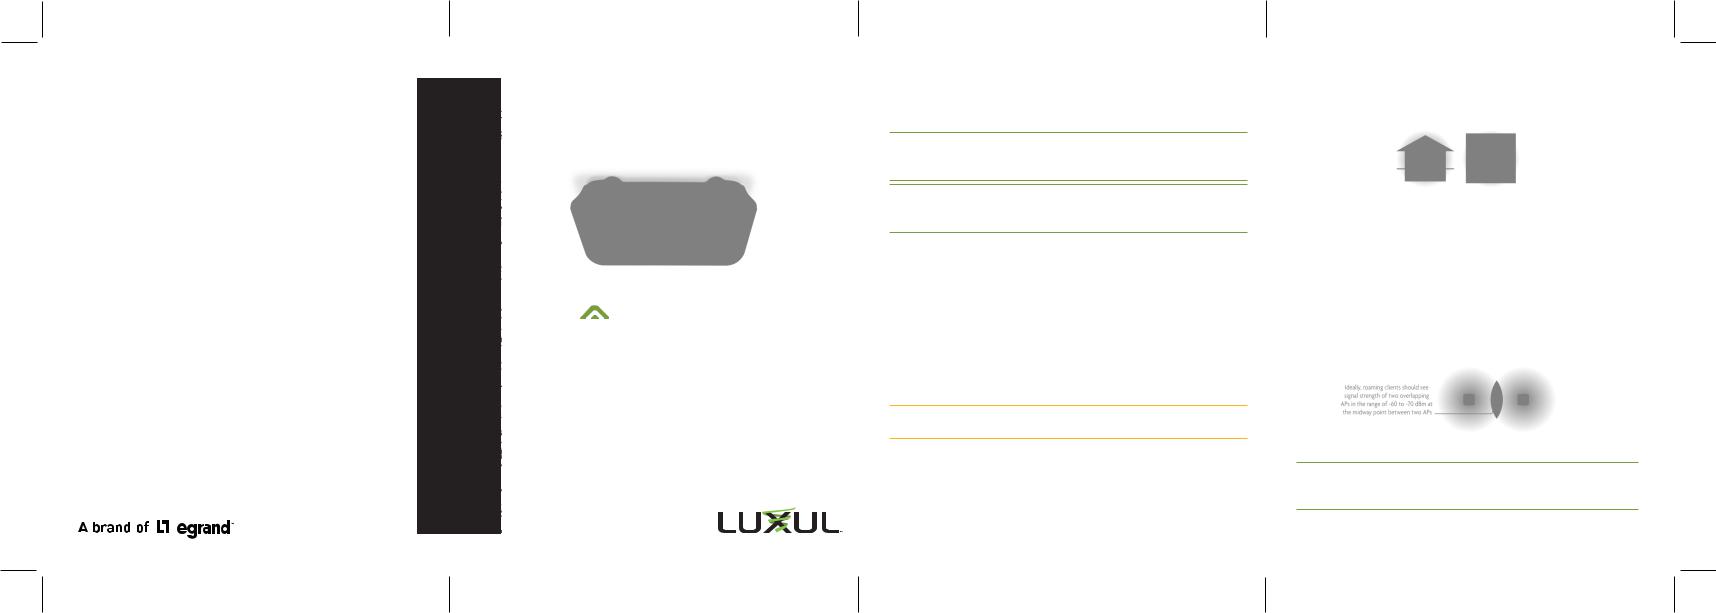 Luxul Wireless XAP1610 User Manual